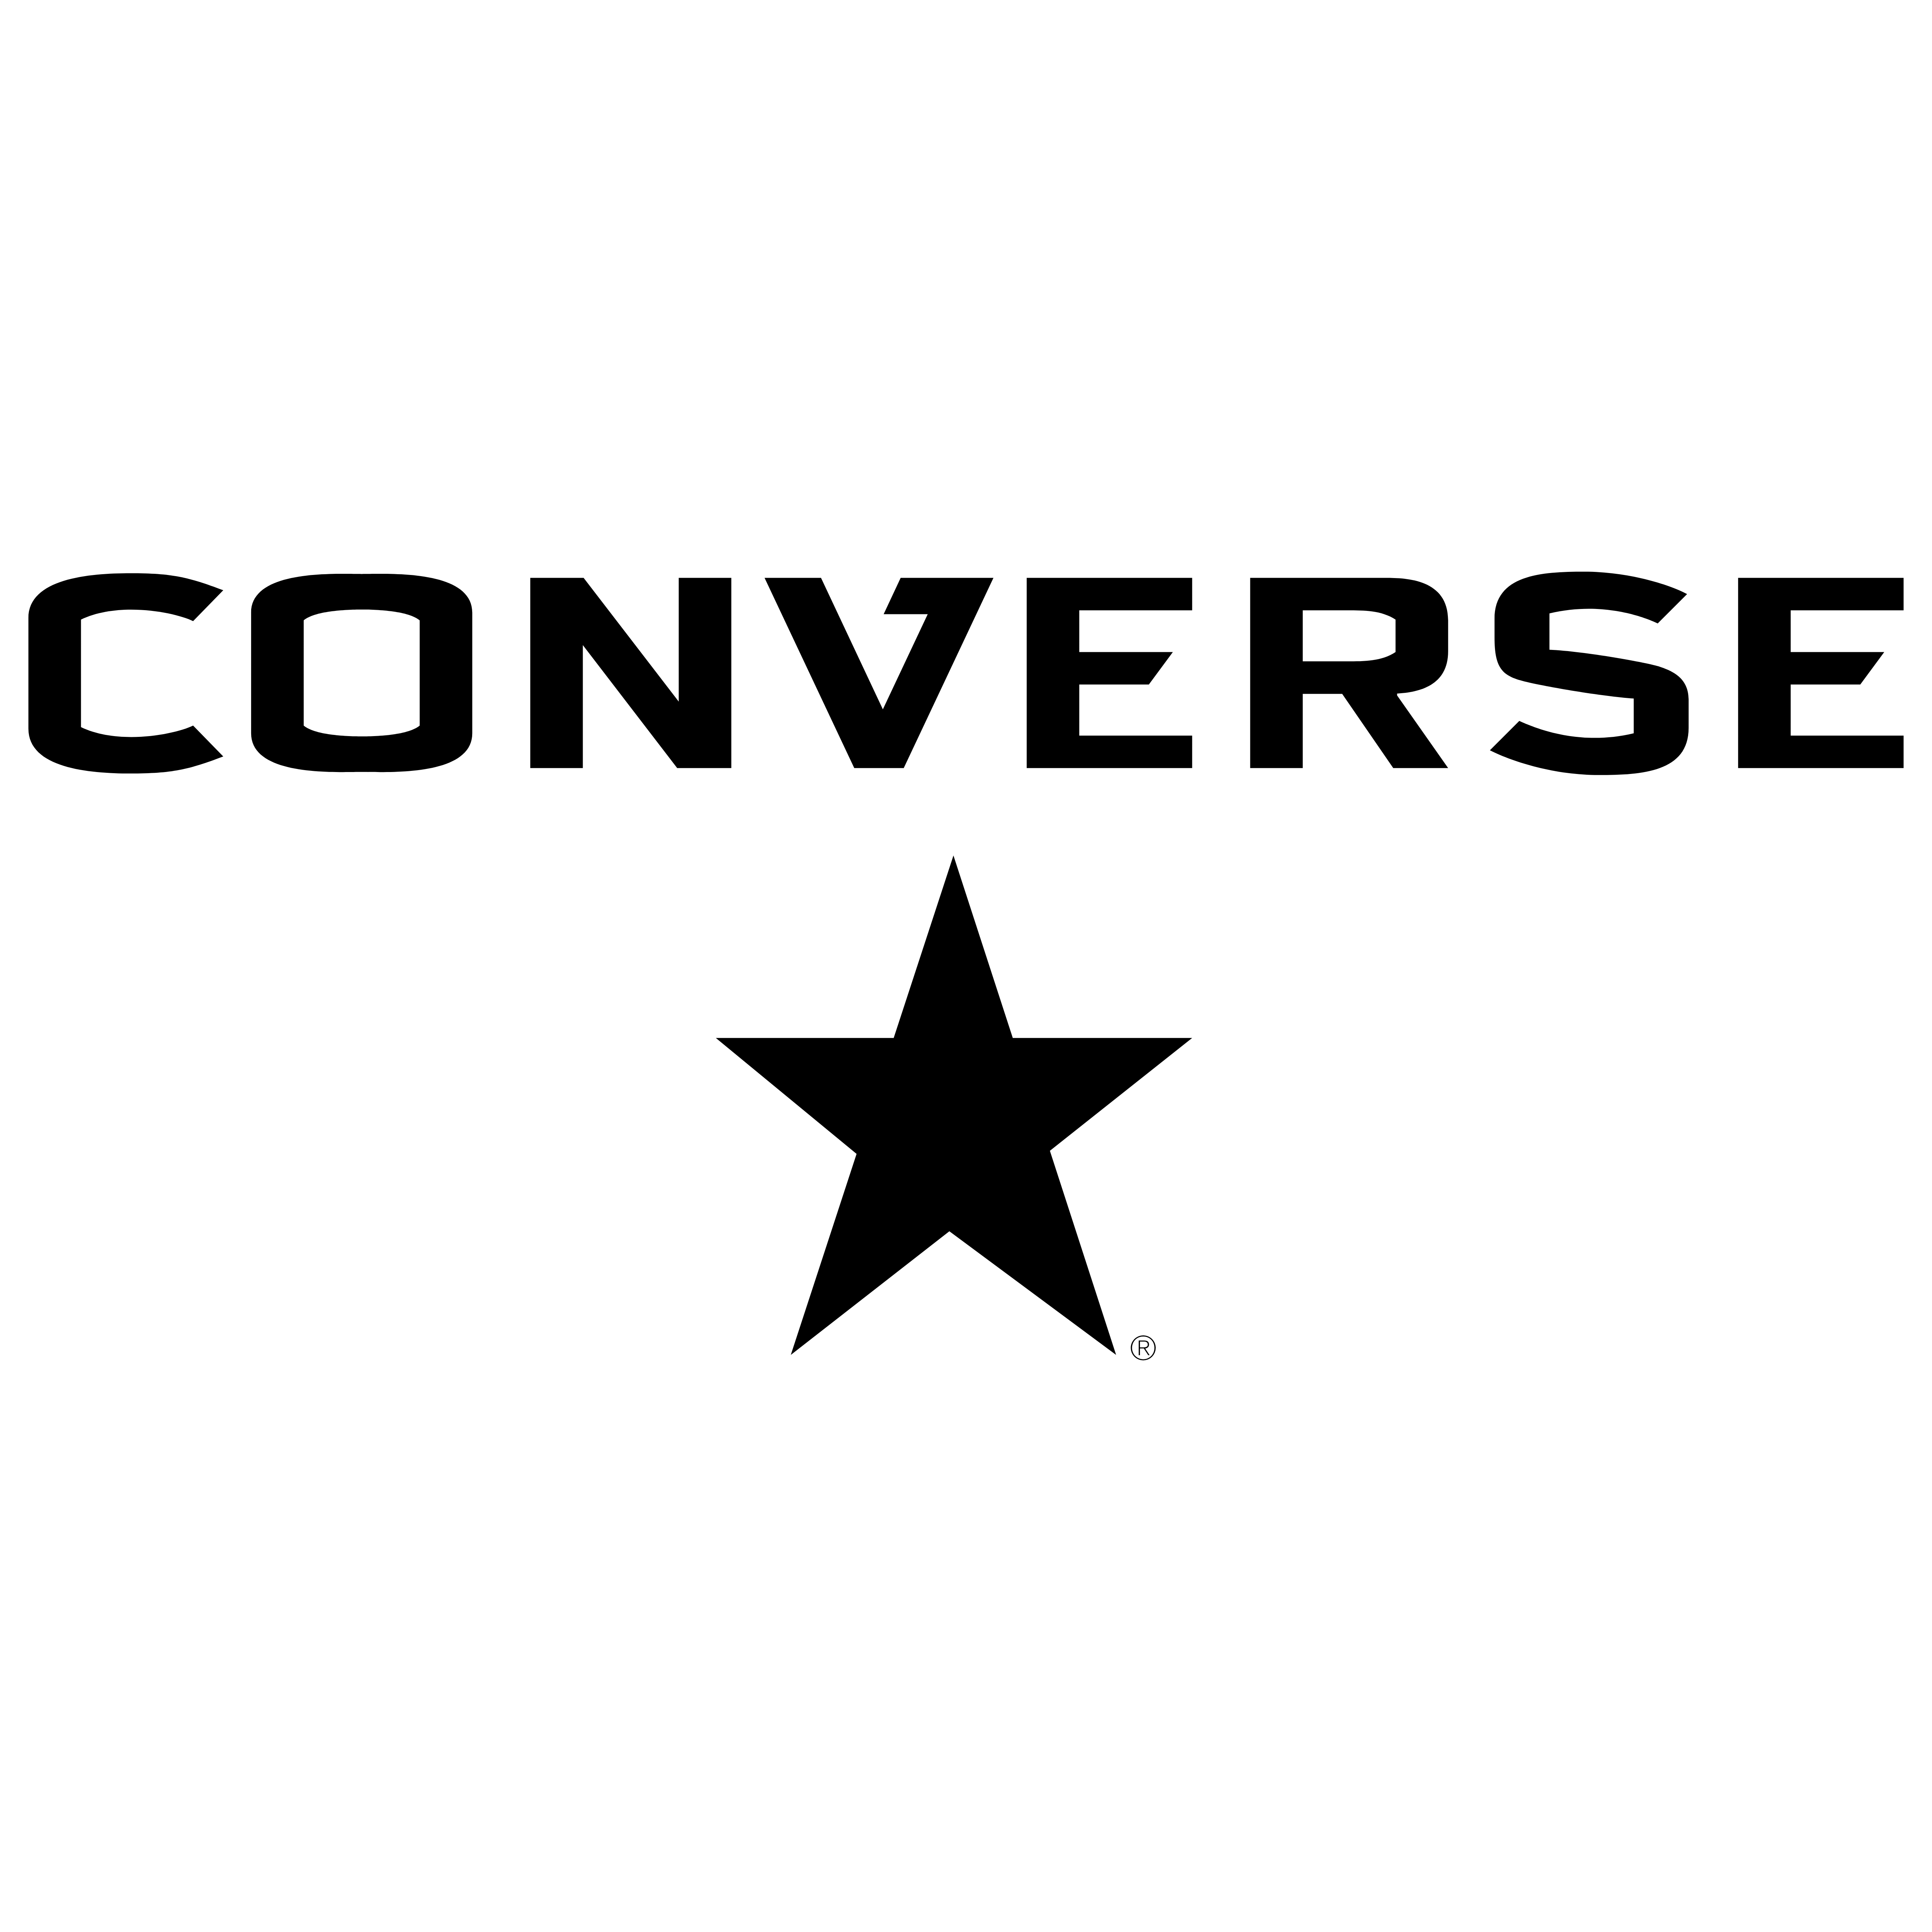 Converse – Logos Download